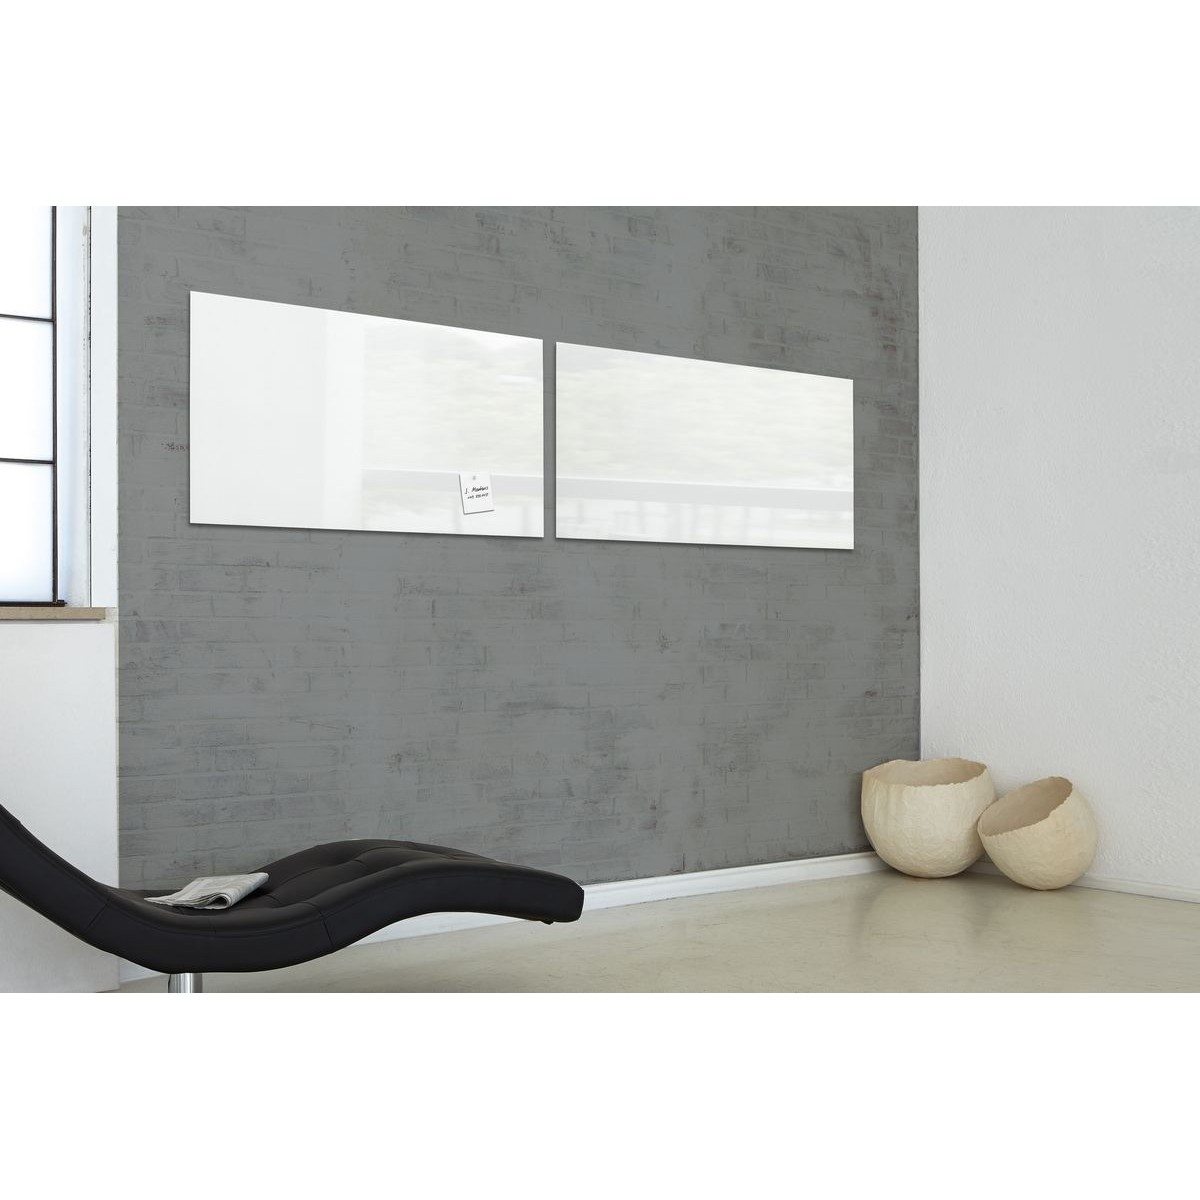 GL146 - Sigel - Lavagna Magnetica - Super White - 91 x 46 cm 